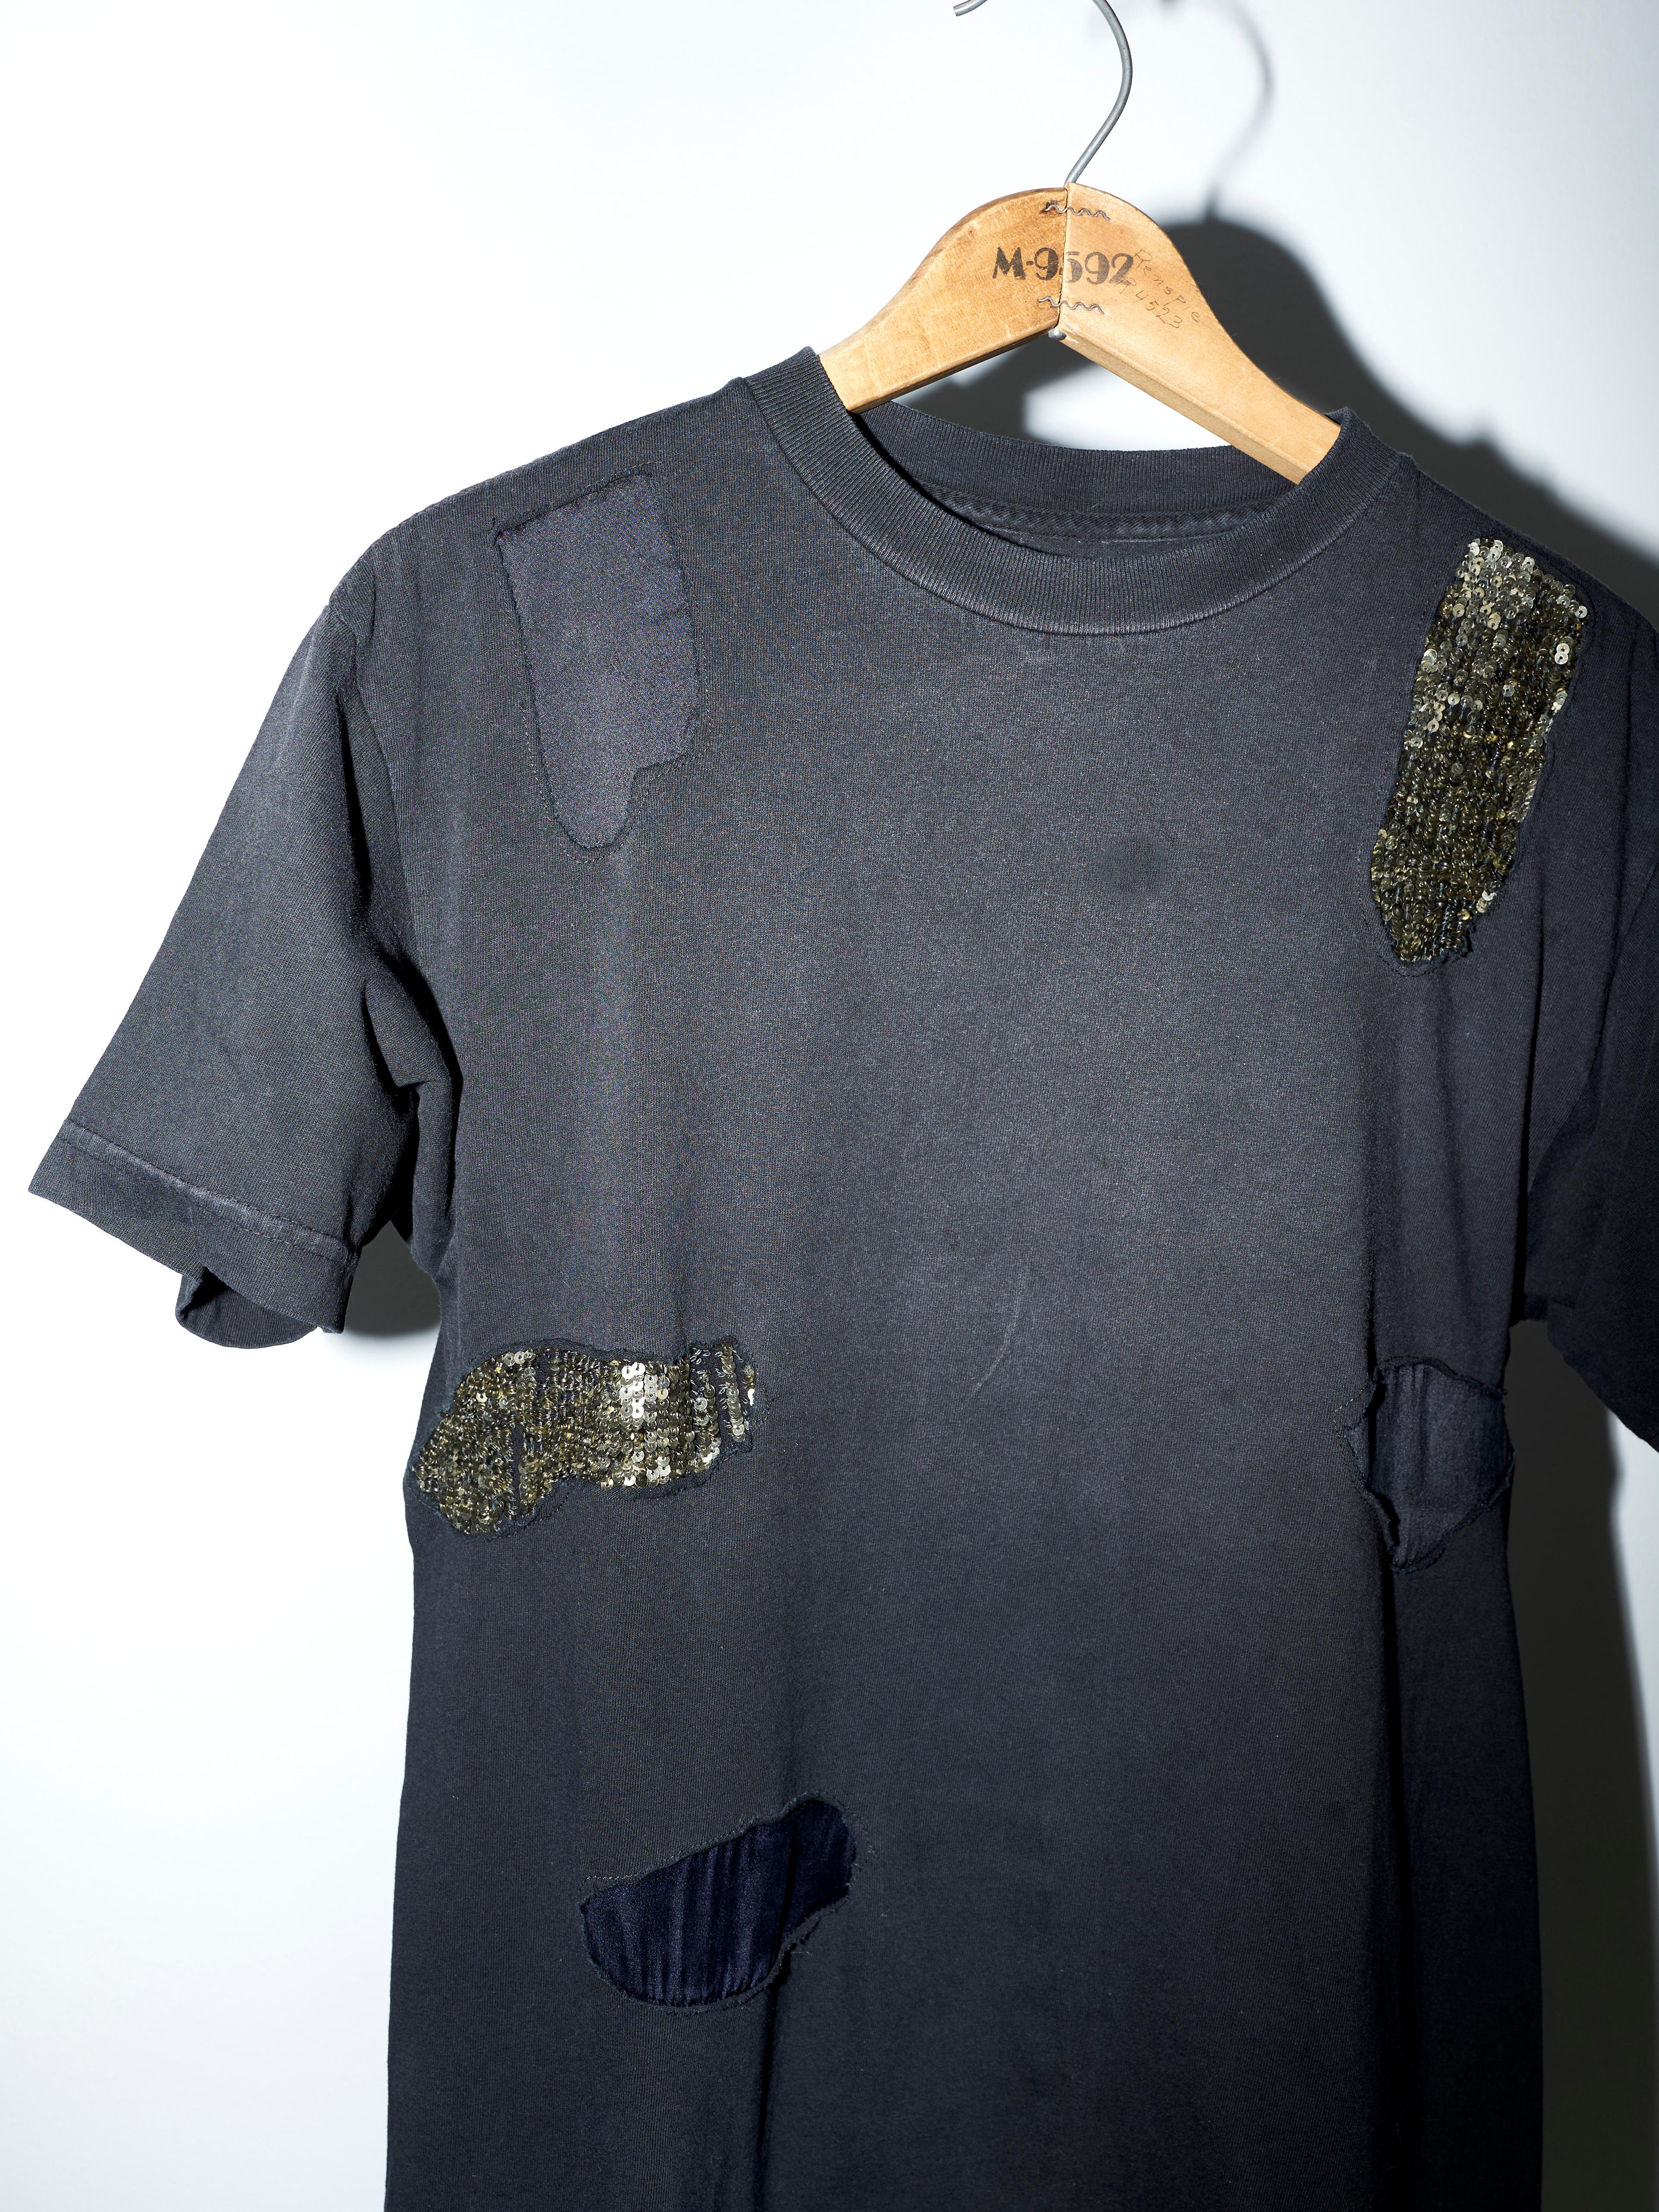 J Dauphin Black T-Shirt Embellished  Patch Work Sequin Silk Body Cotton  12